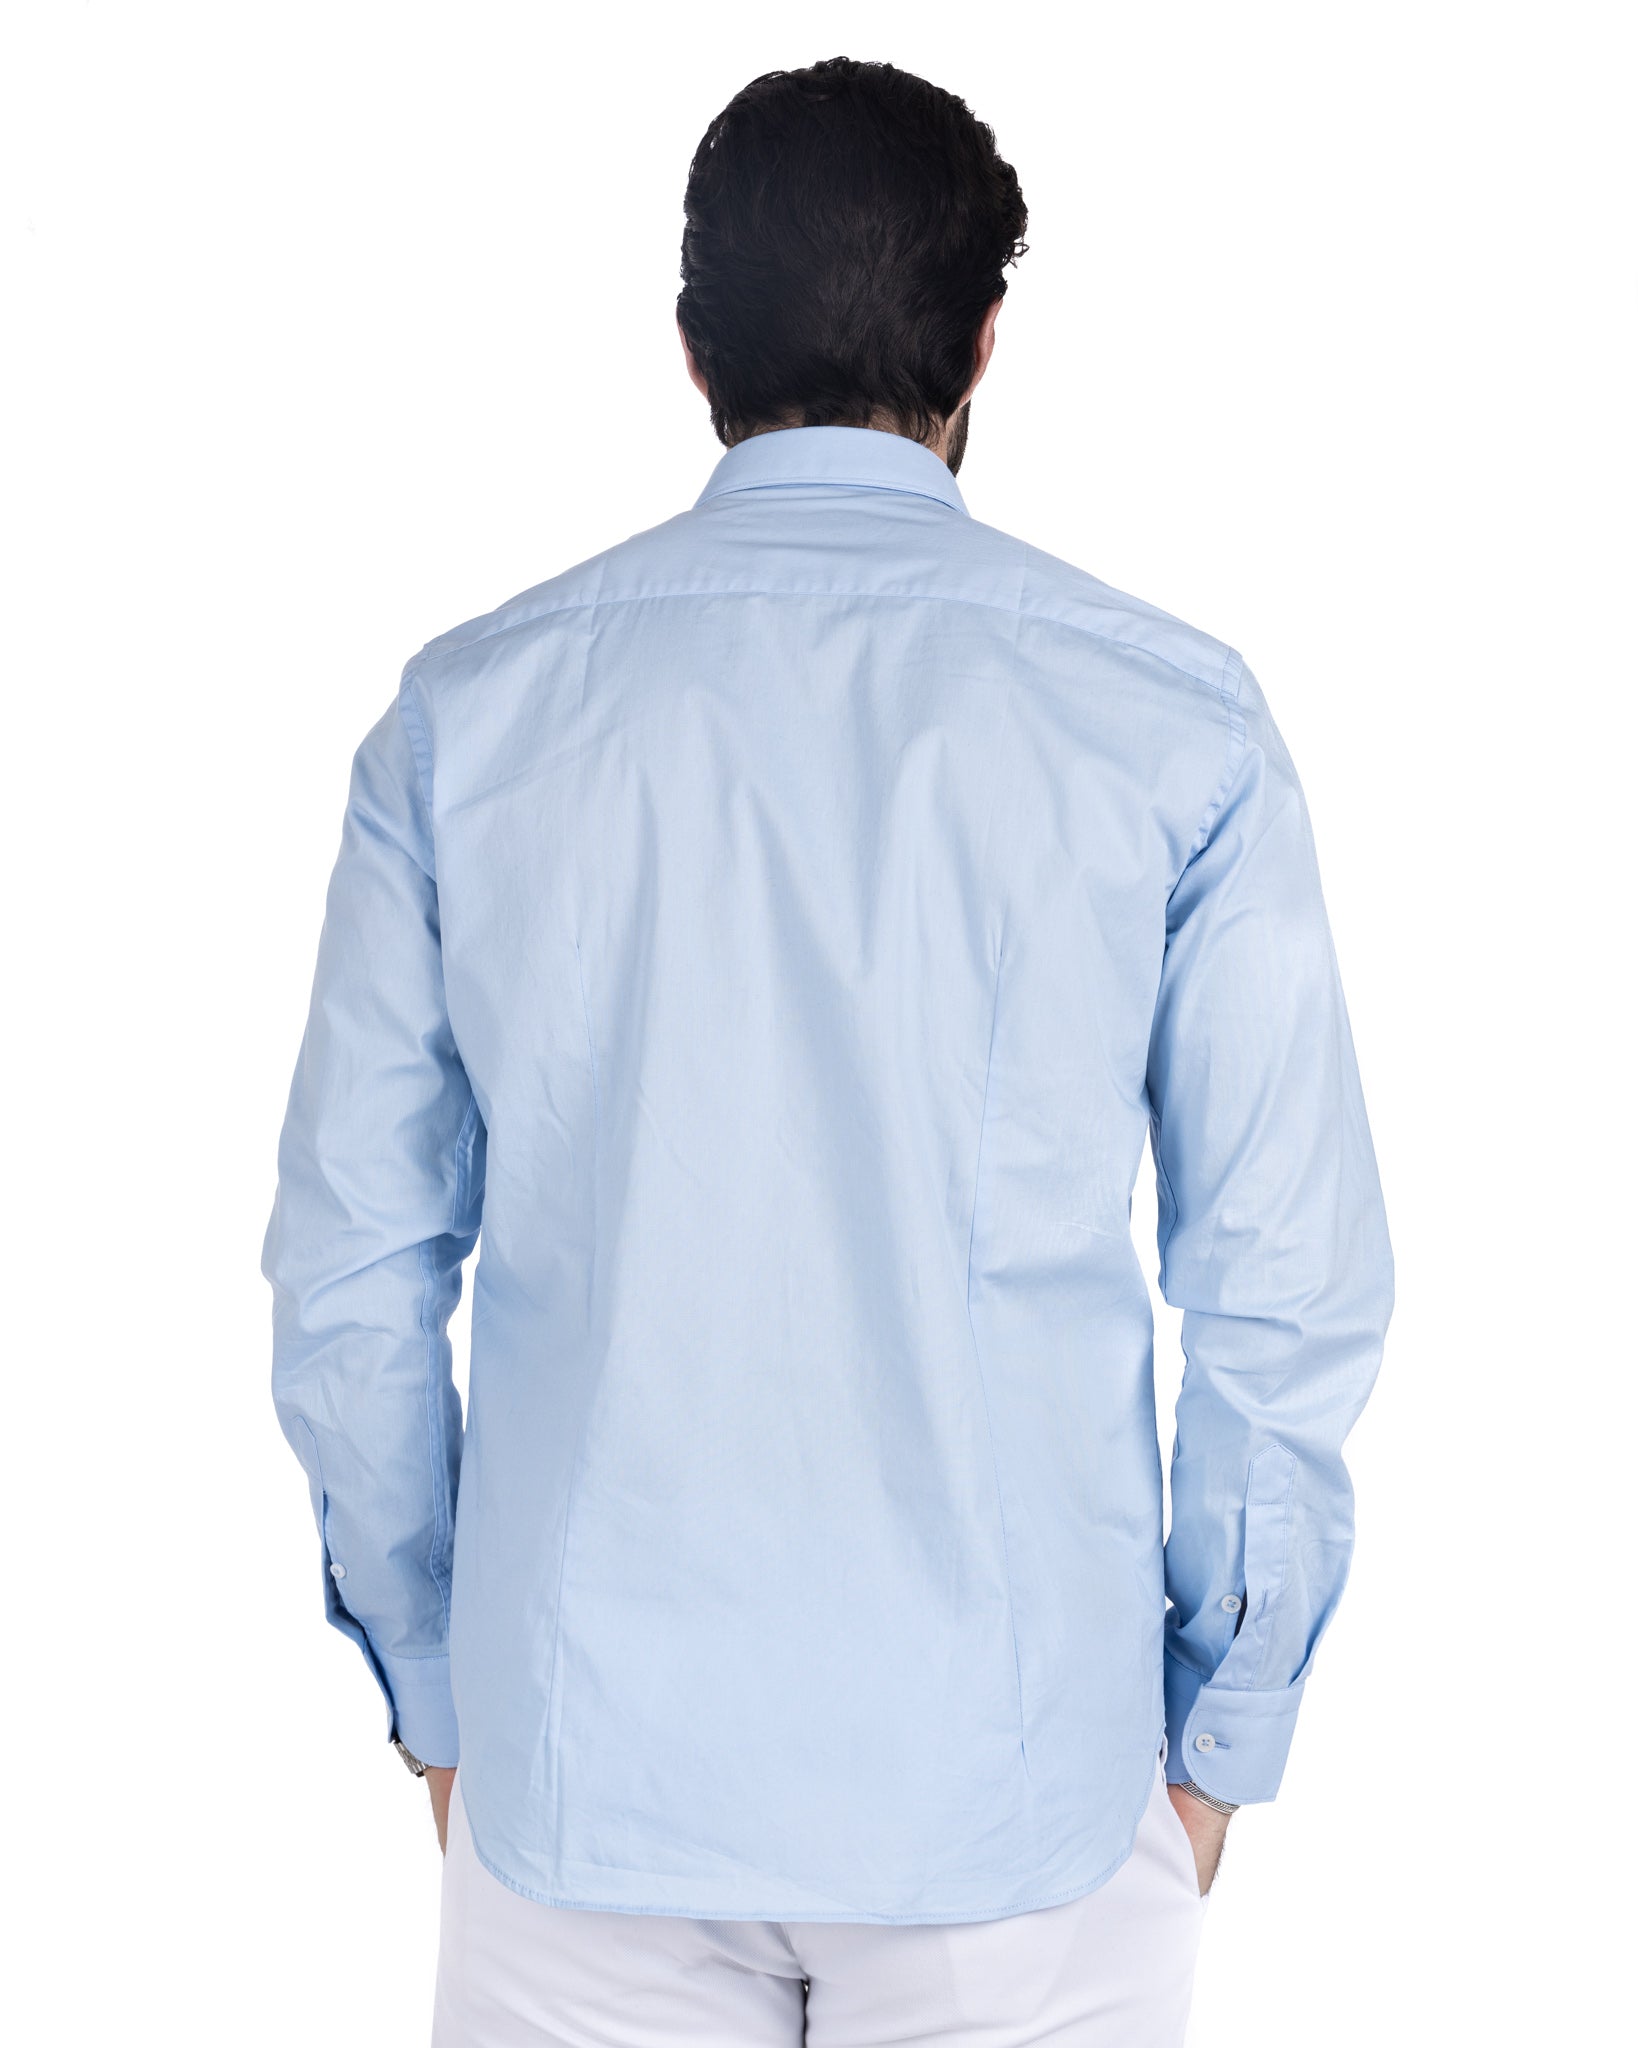 Shirt - classic light blue basic in cotton